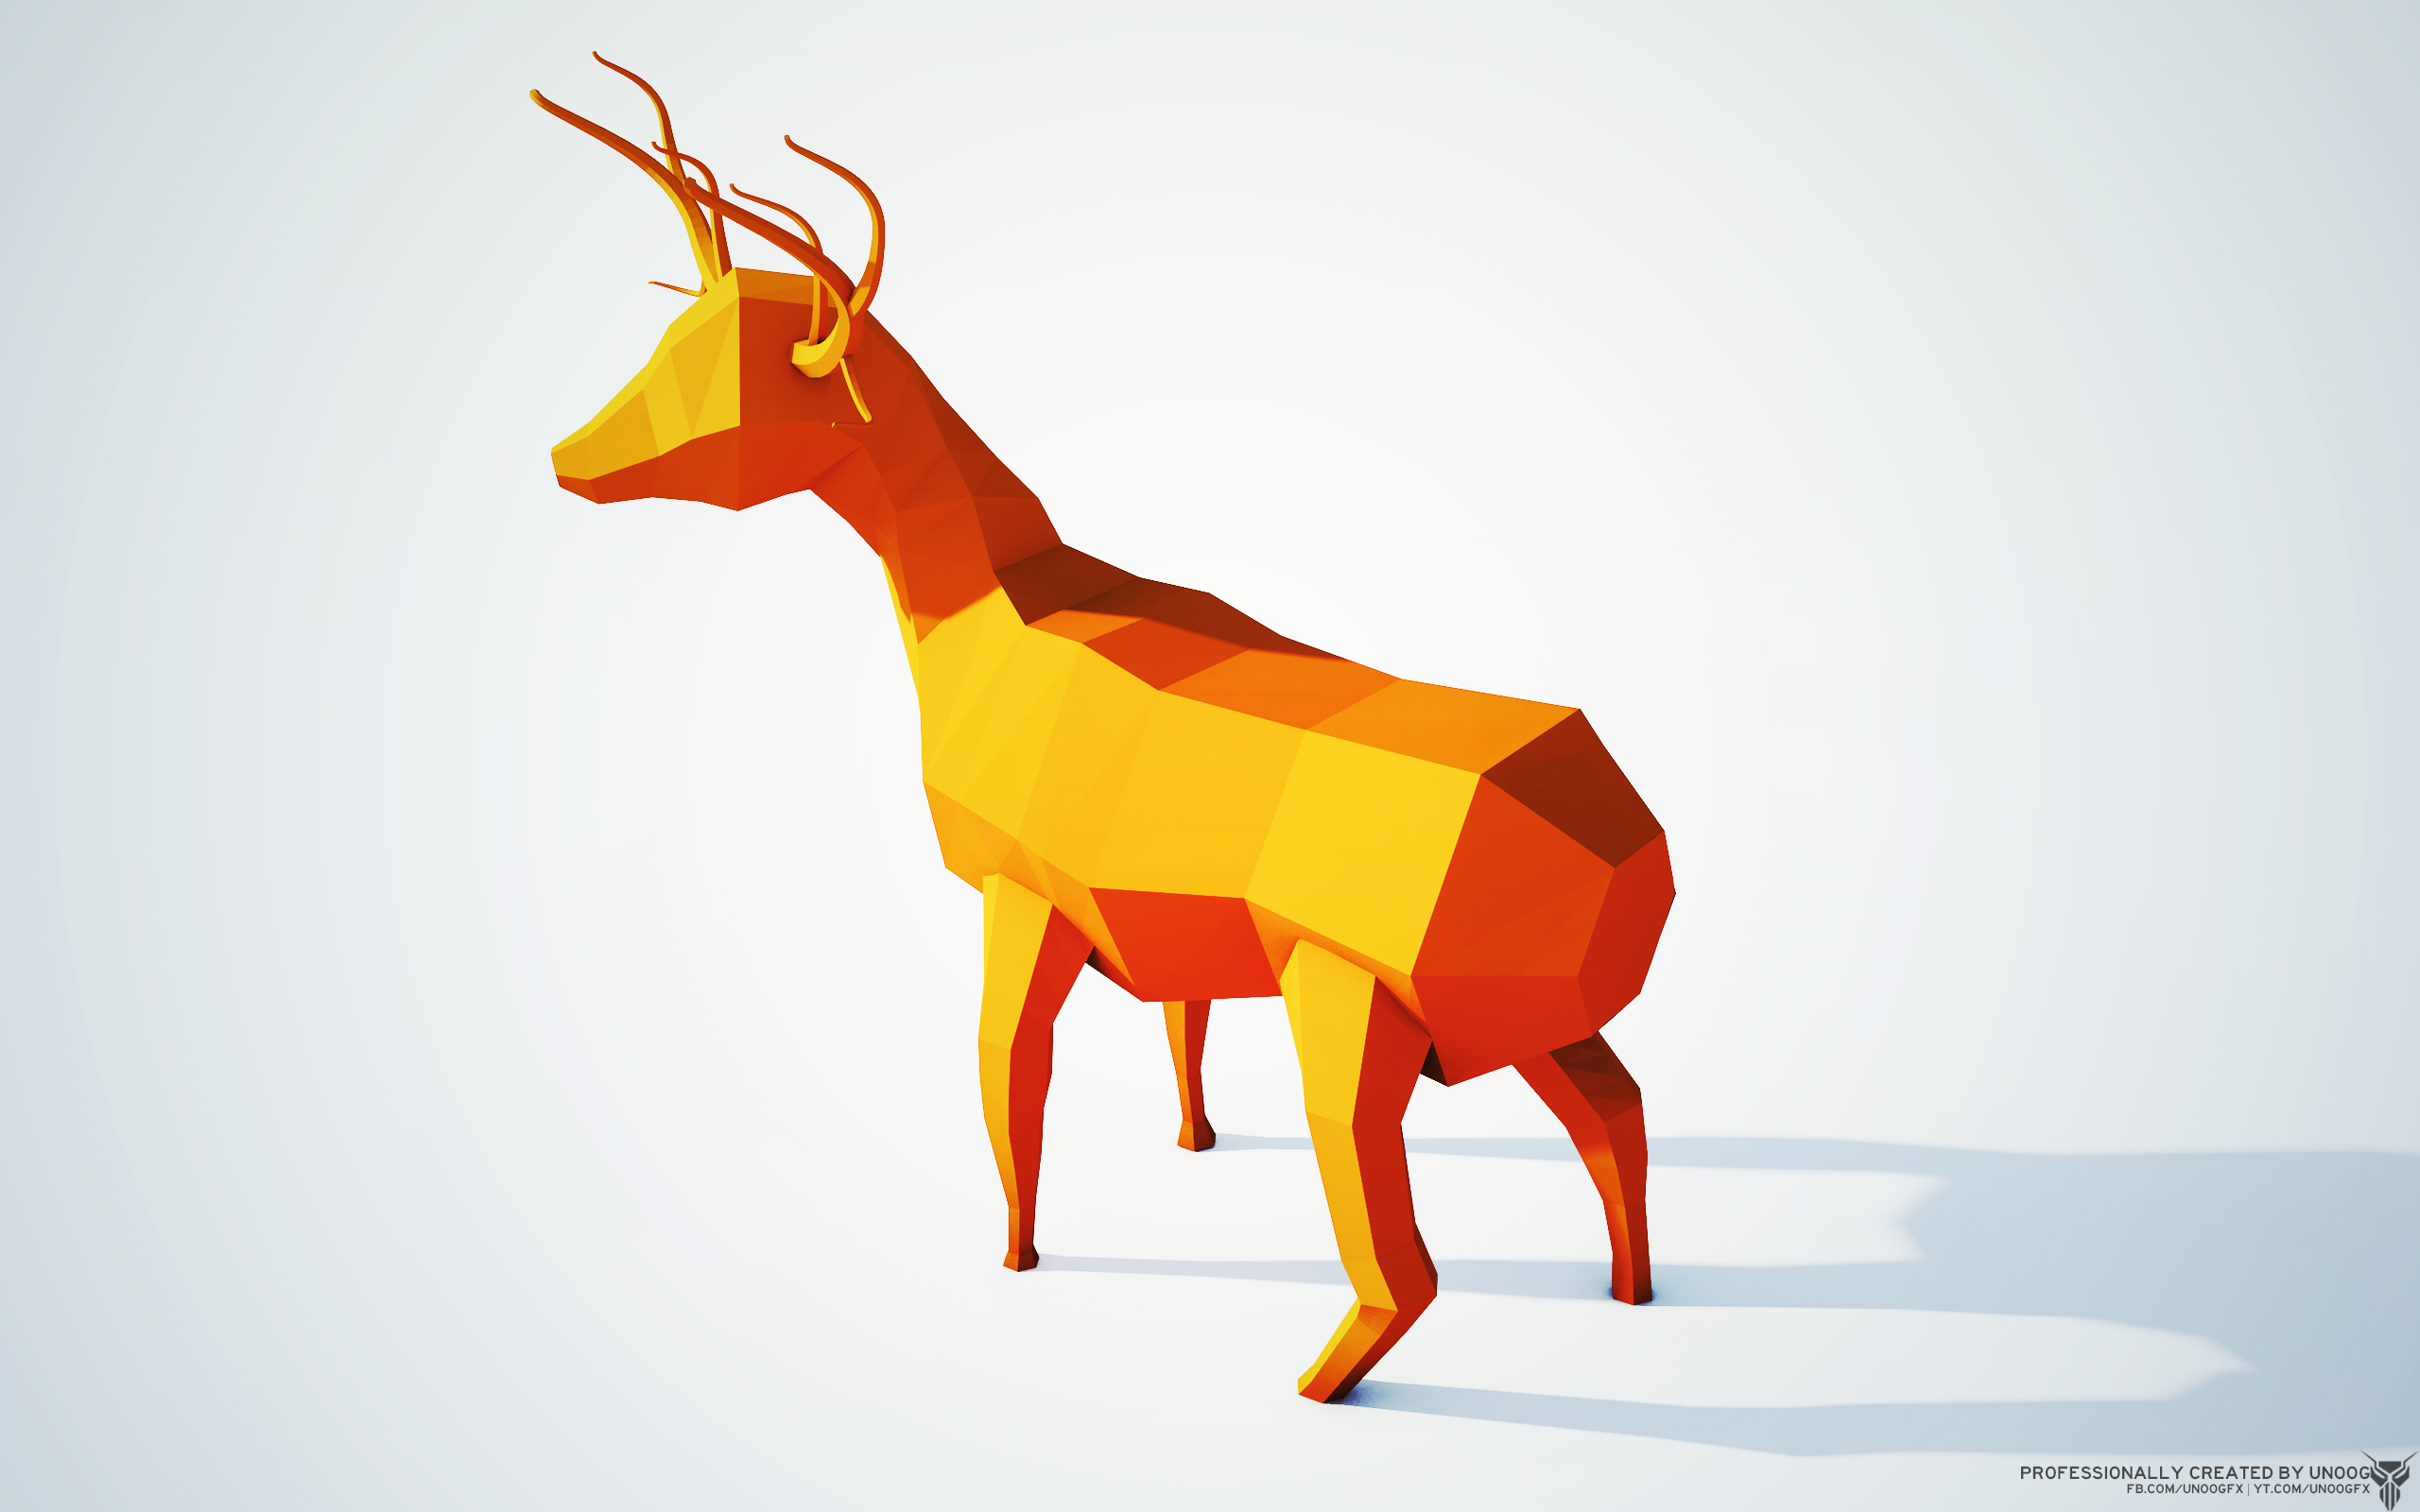 General 2560x1600 low poly isometric animals orange mammals deer digital art simple background